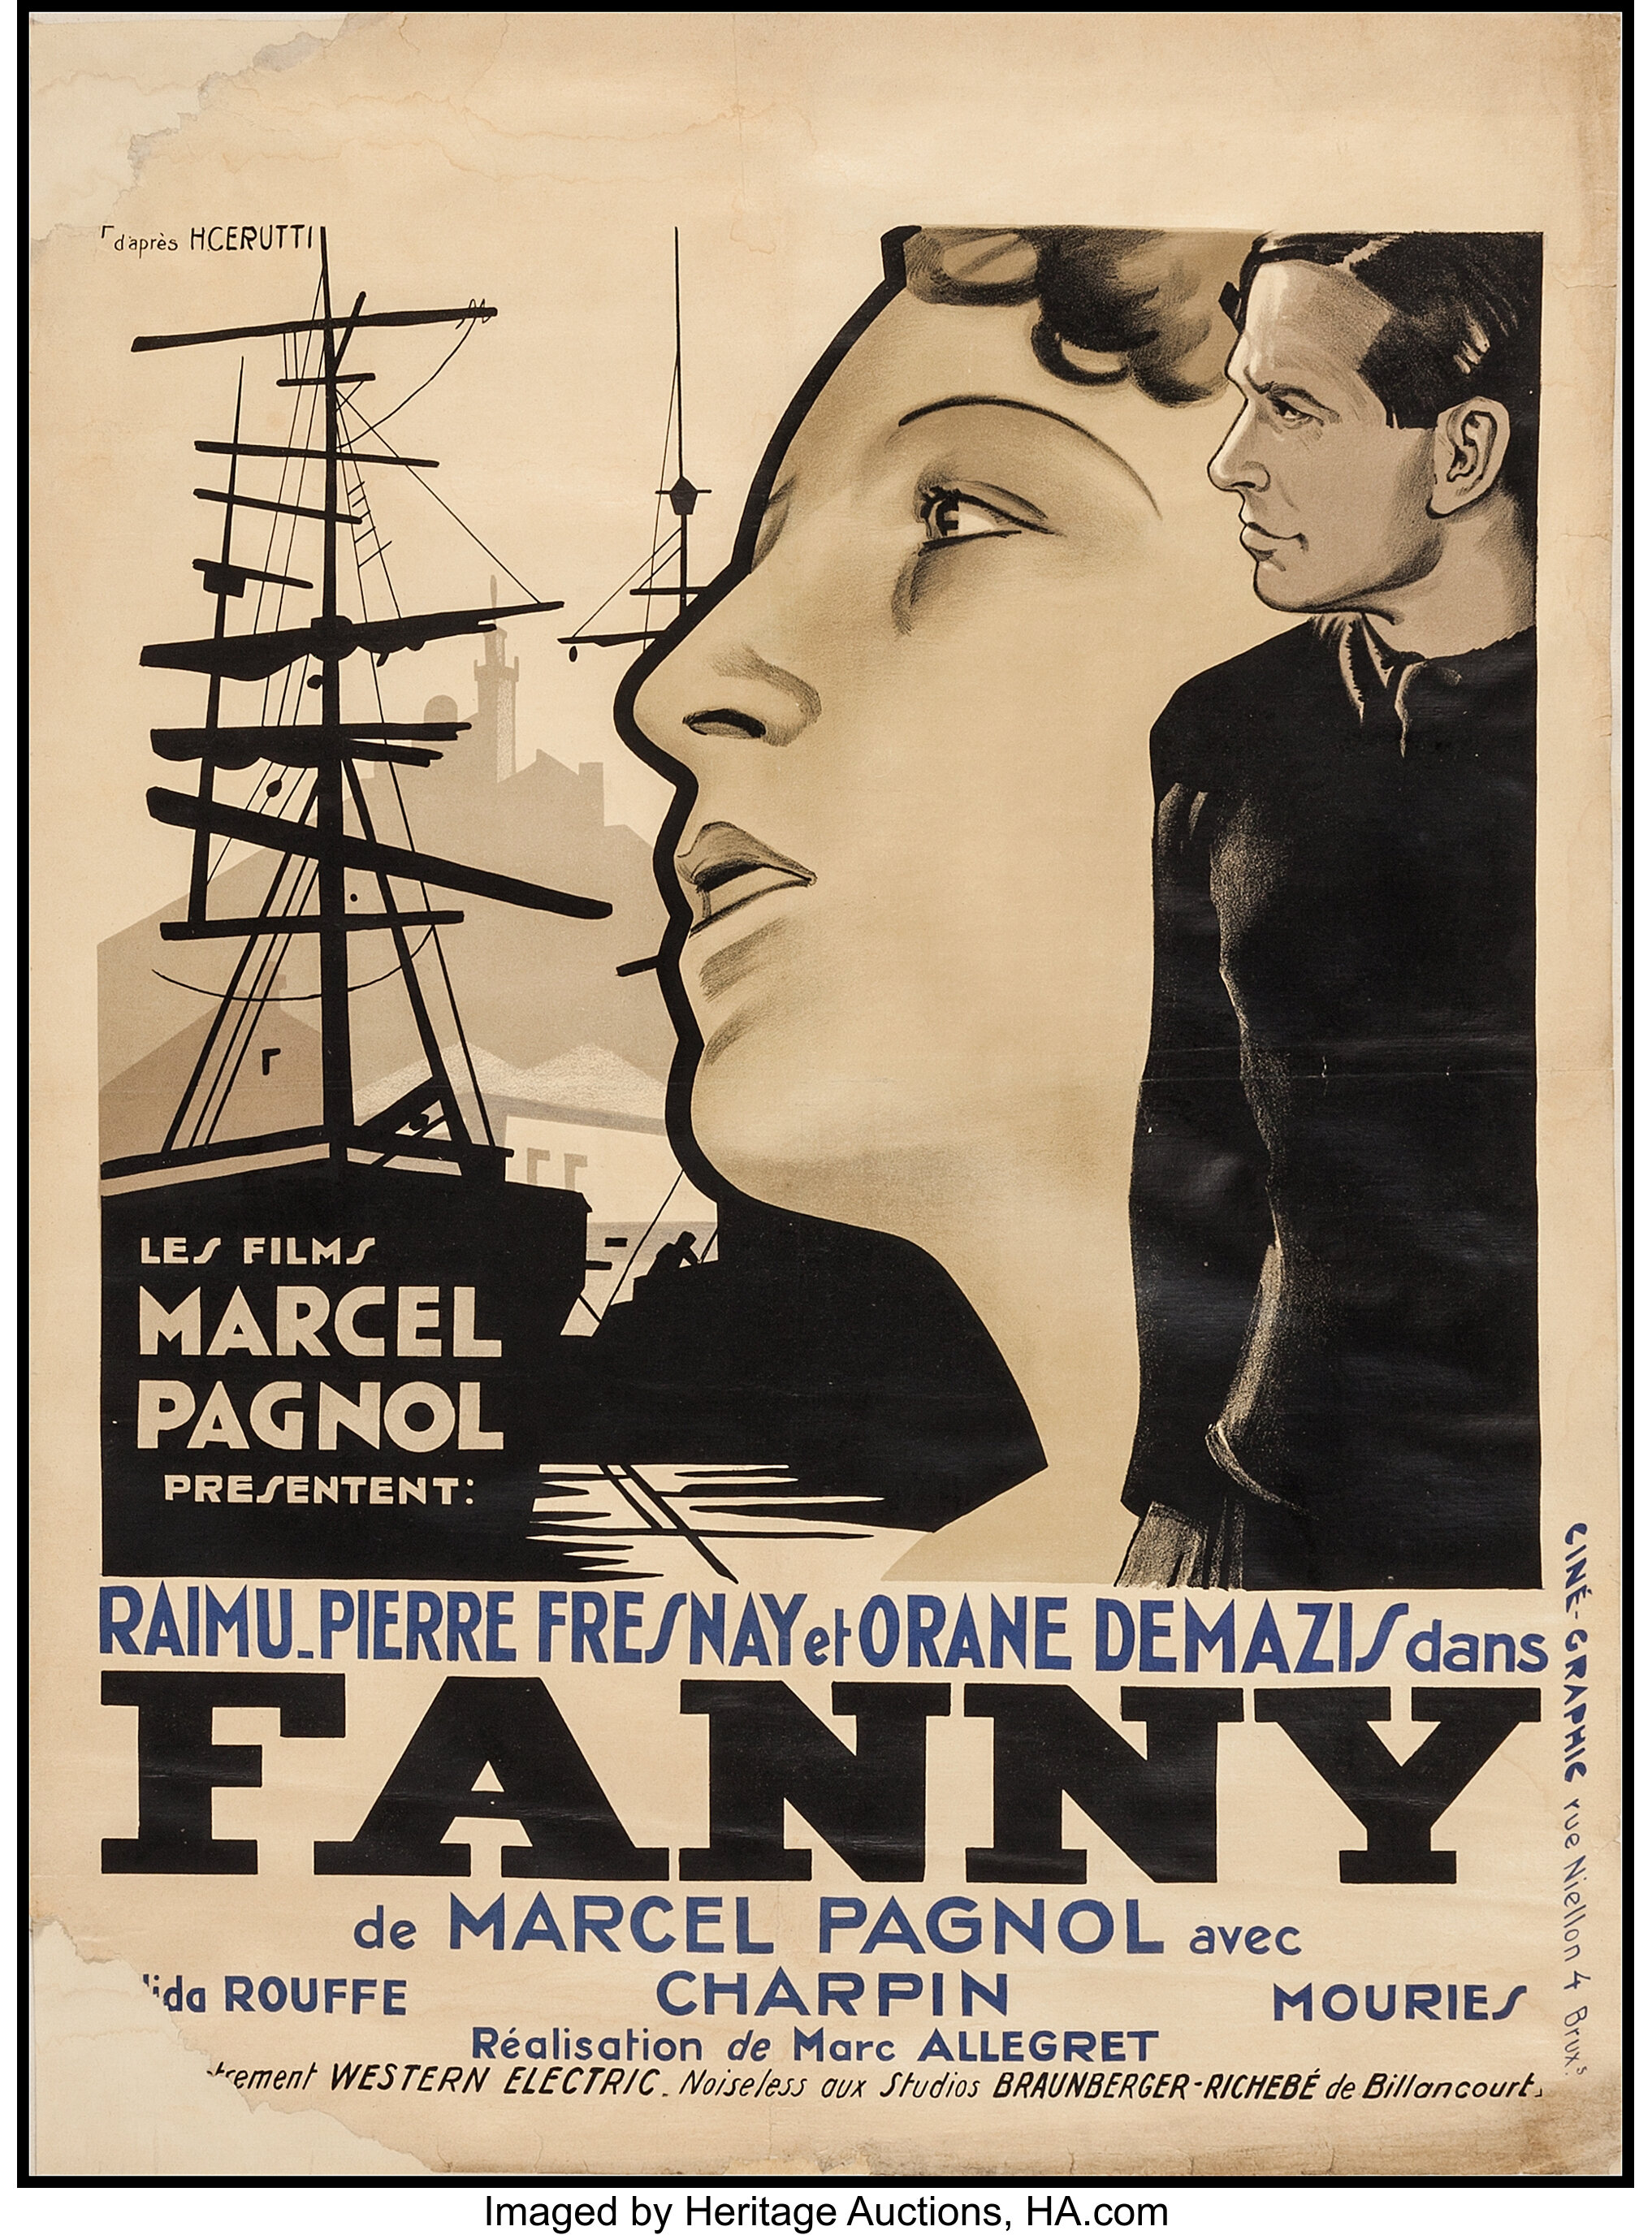 Fanny Les Films Marcel Pagnol 1932 French Affiche 245 X Lot 52122 Heritage Auctions 